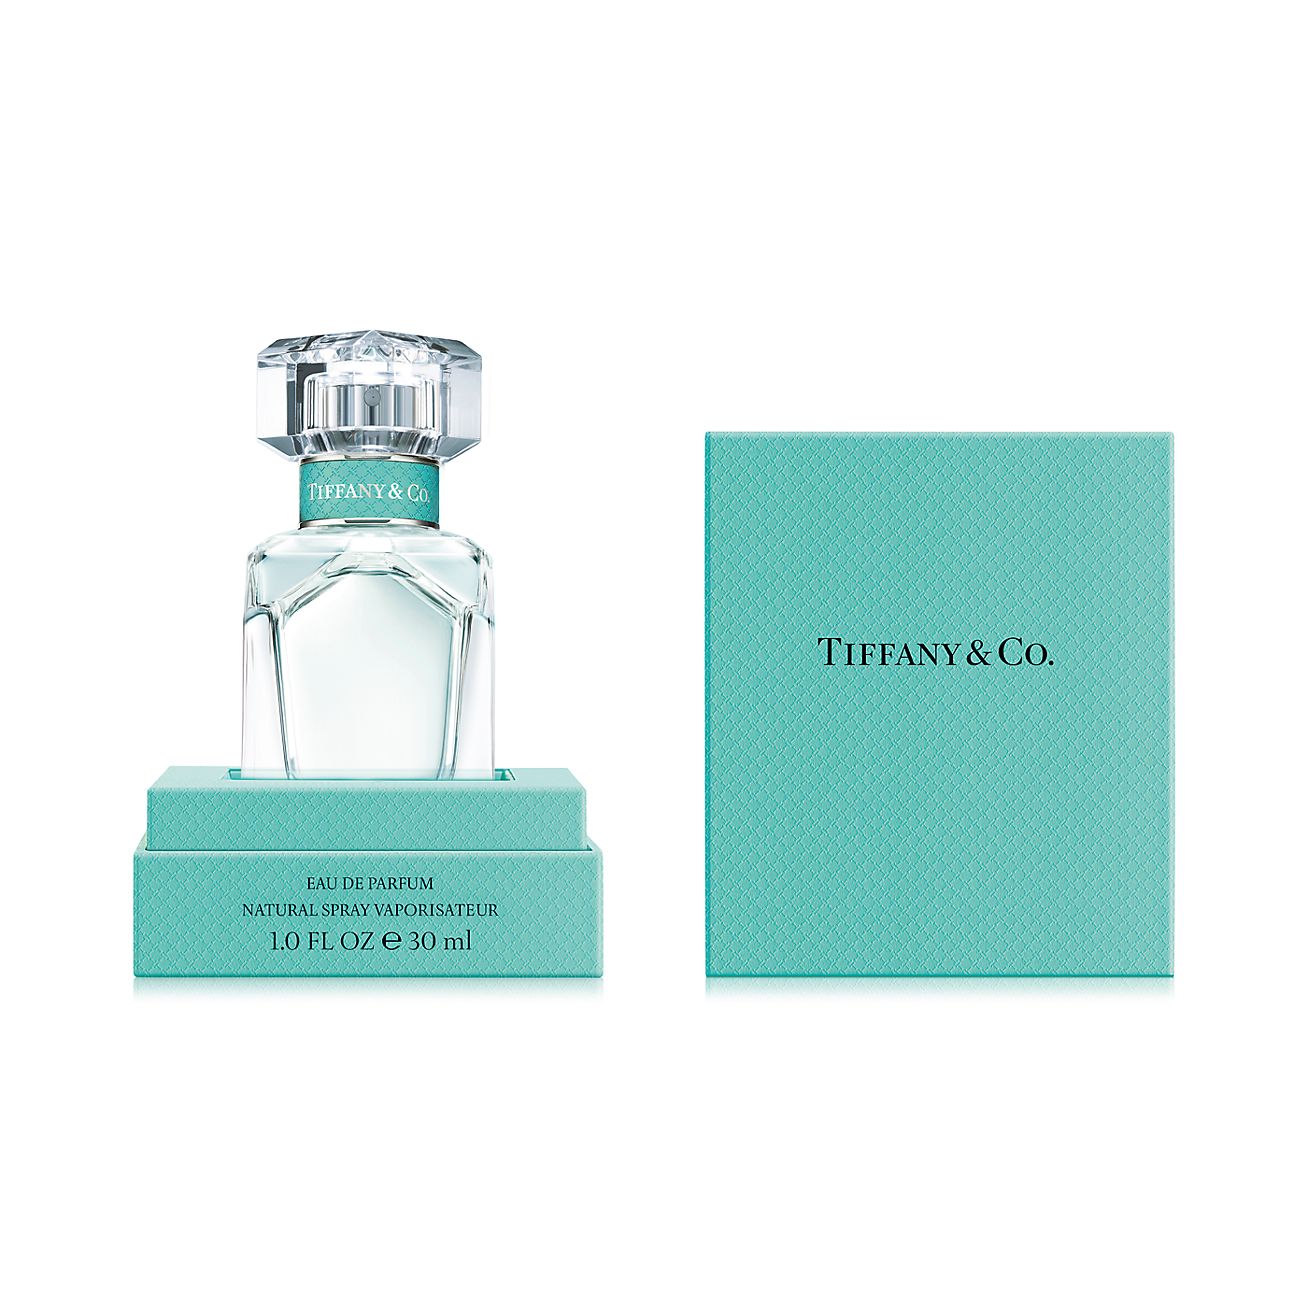 tiffany perfume 30ml